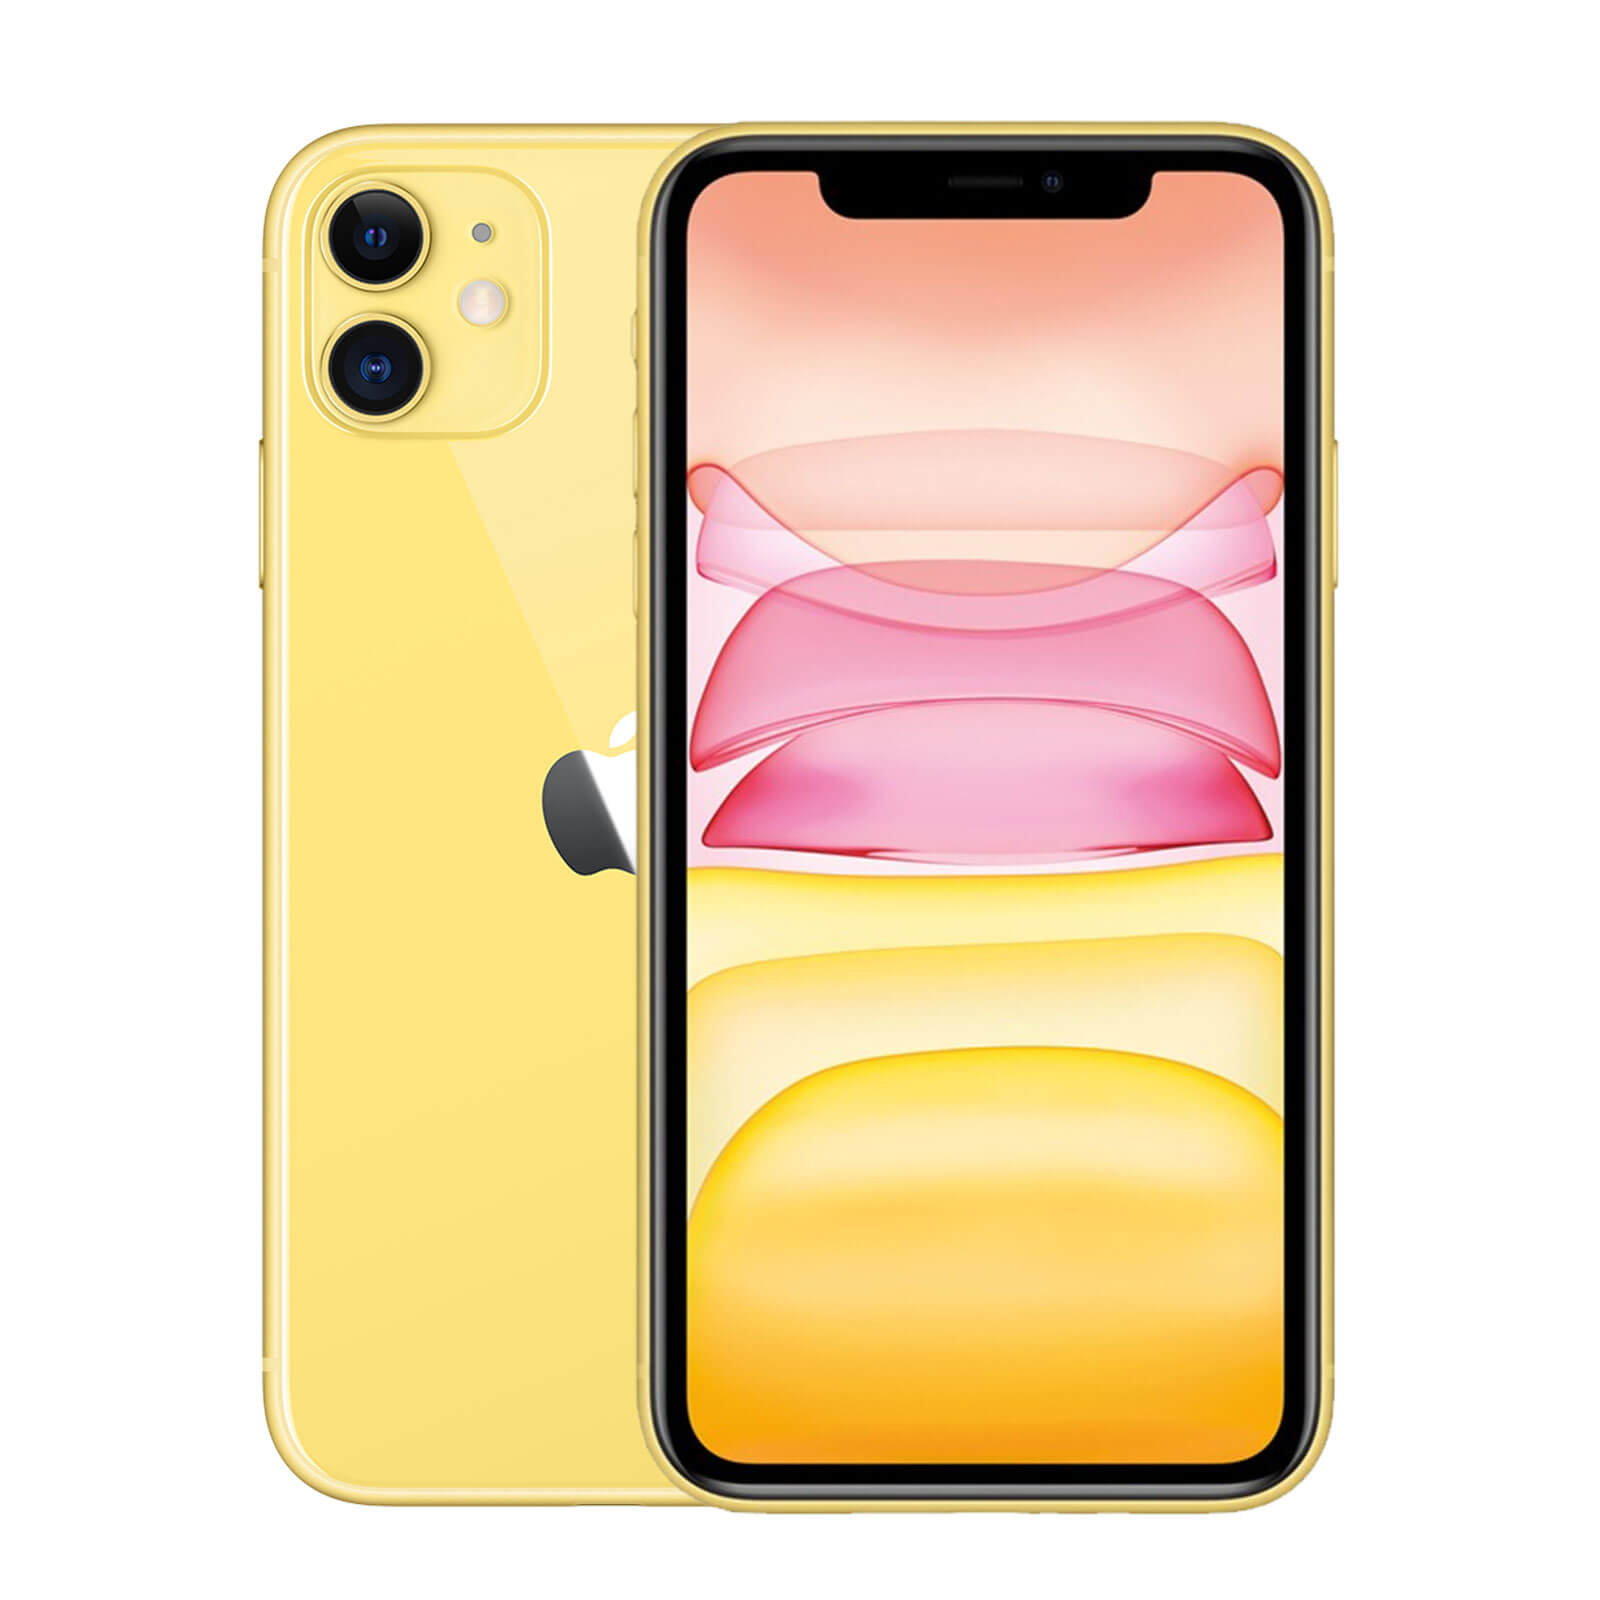 Apple iPhone 11 256GB Yellow Fair - Unlocked